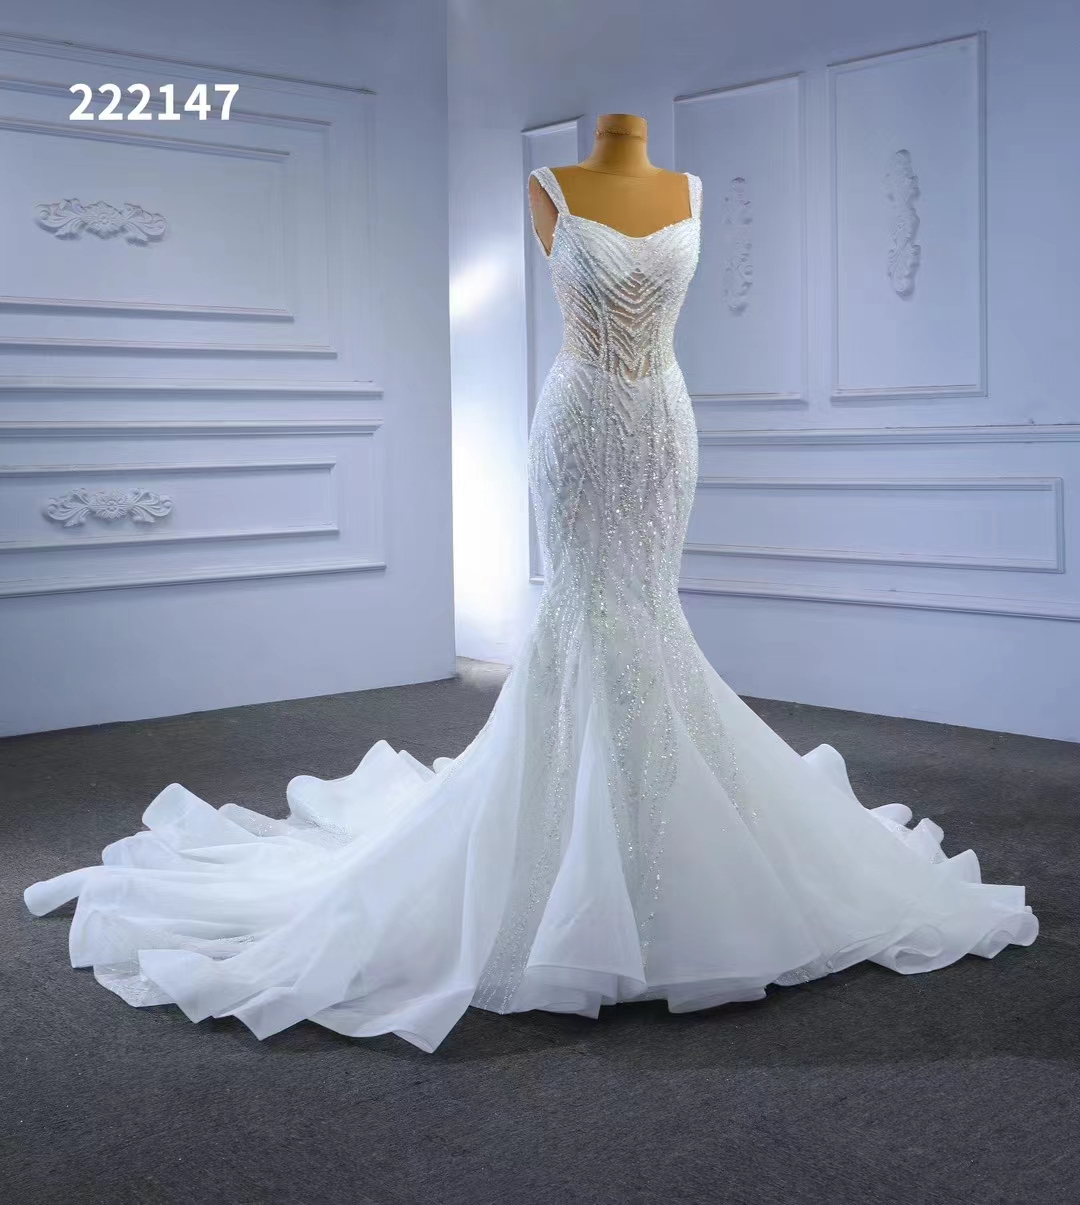 Zeemeermin trouwjurk mori super mooie droom bruid kanten slanke witte jurk sm222147